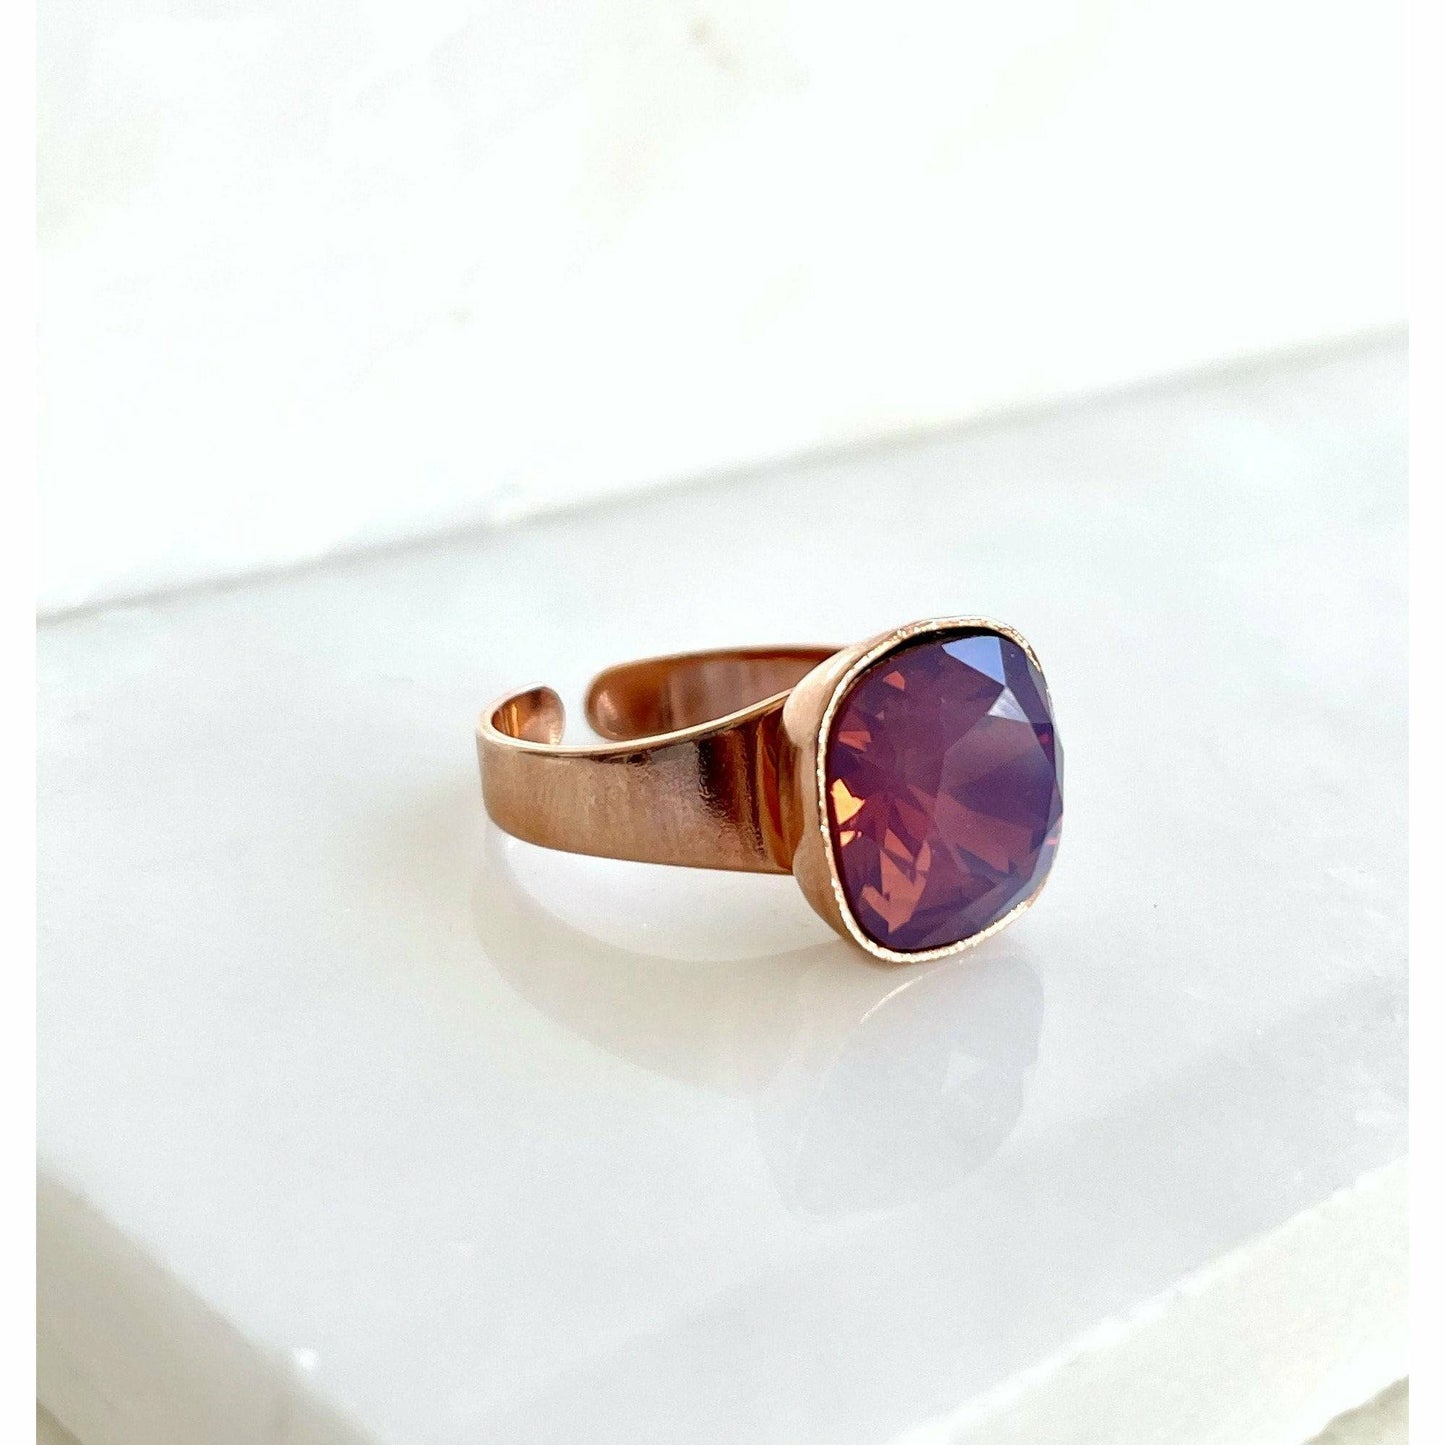 Lavender opal crystal ring on rose gold band